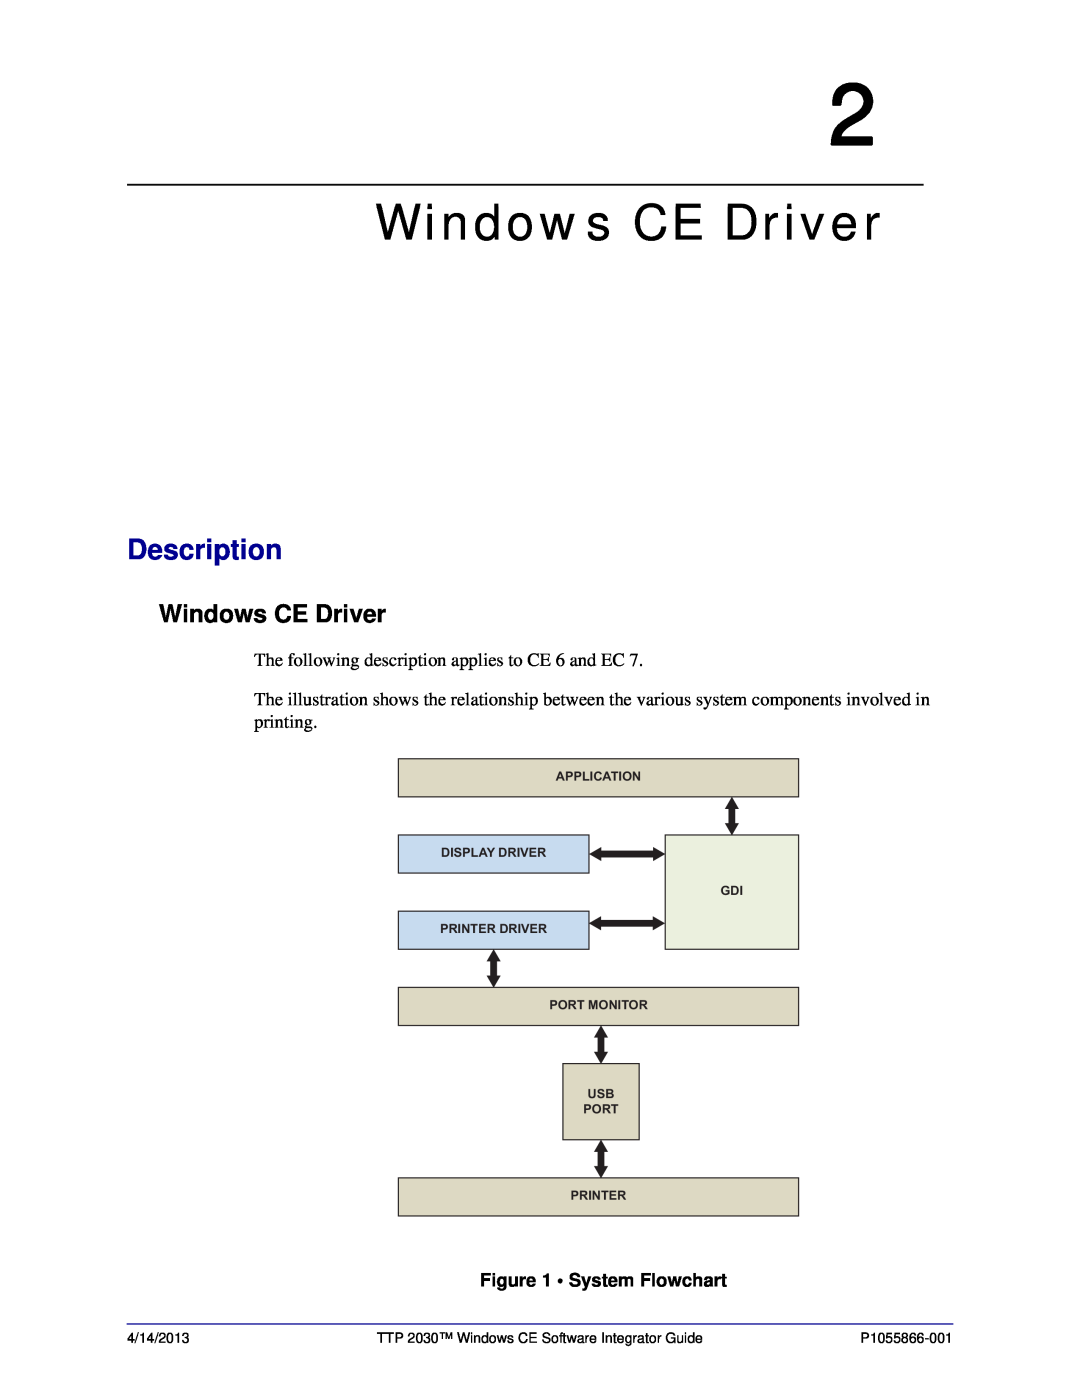 Zebra Technologies TTP 2030 manual Windows CE Driver, Description, System Flowchart, P1055866-001, Printer, 4/14/2013 